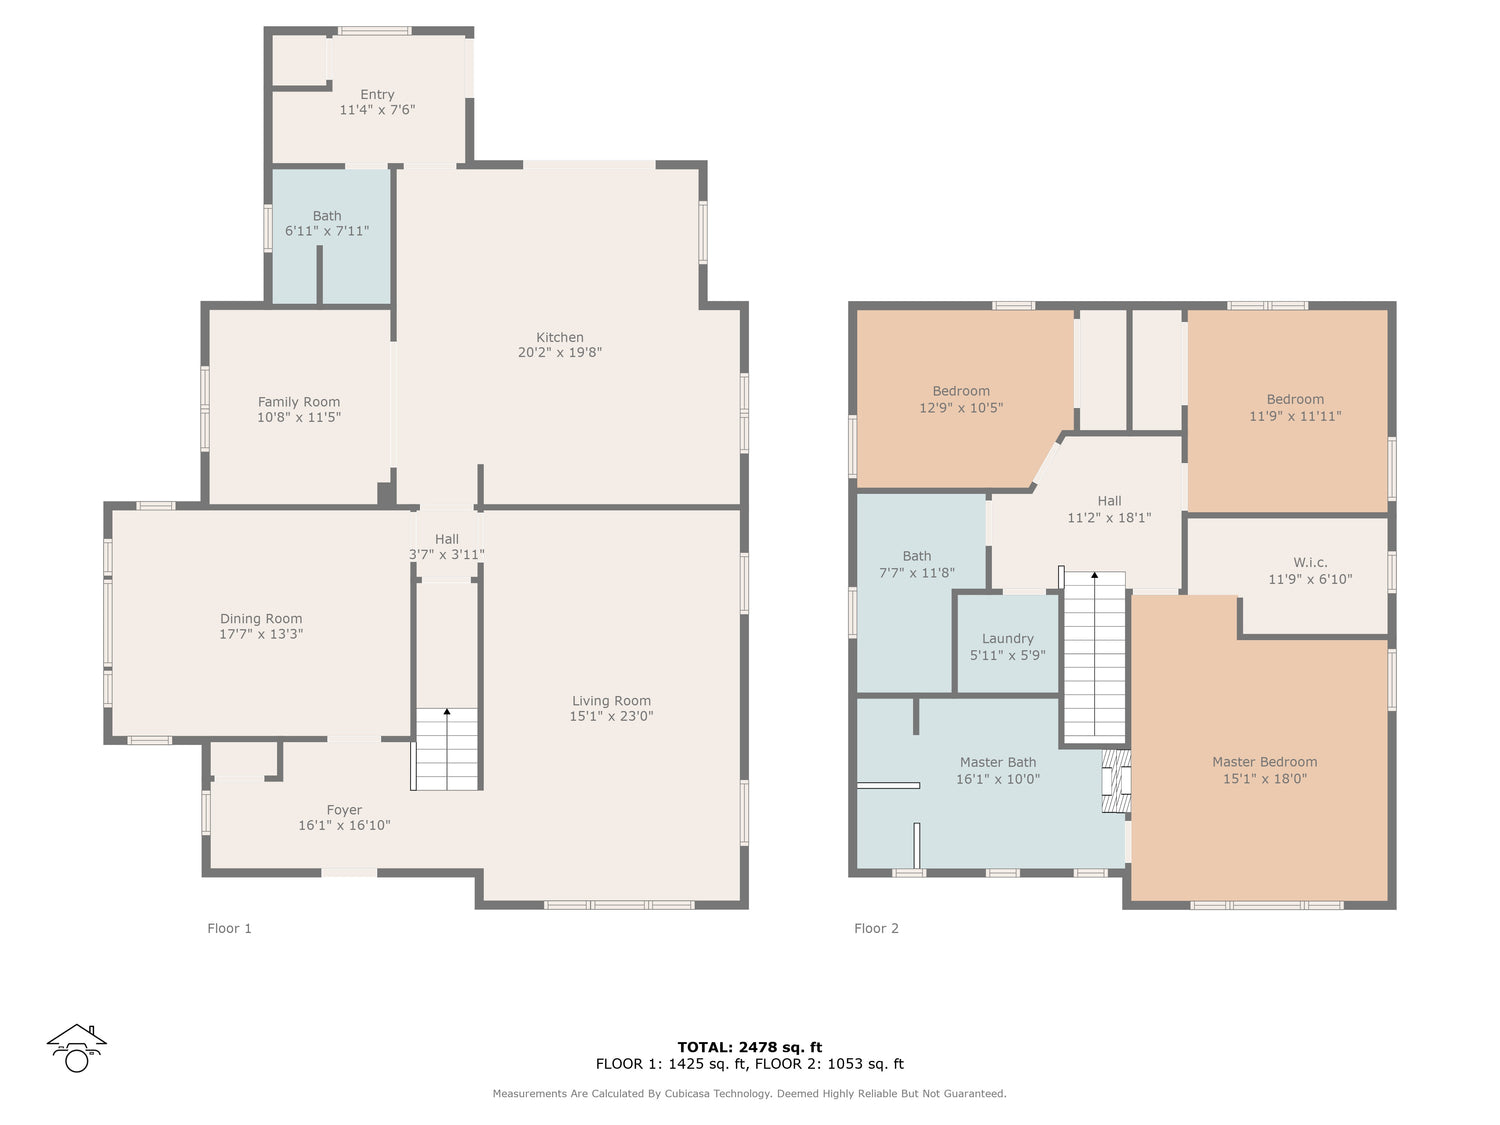 Messner Media - Free Floorplan With Real Estate Photos